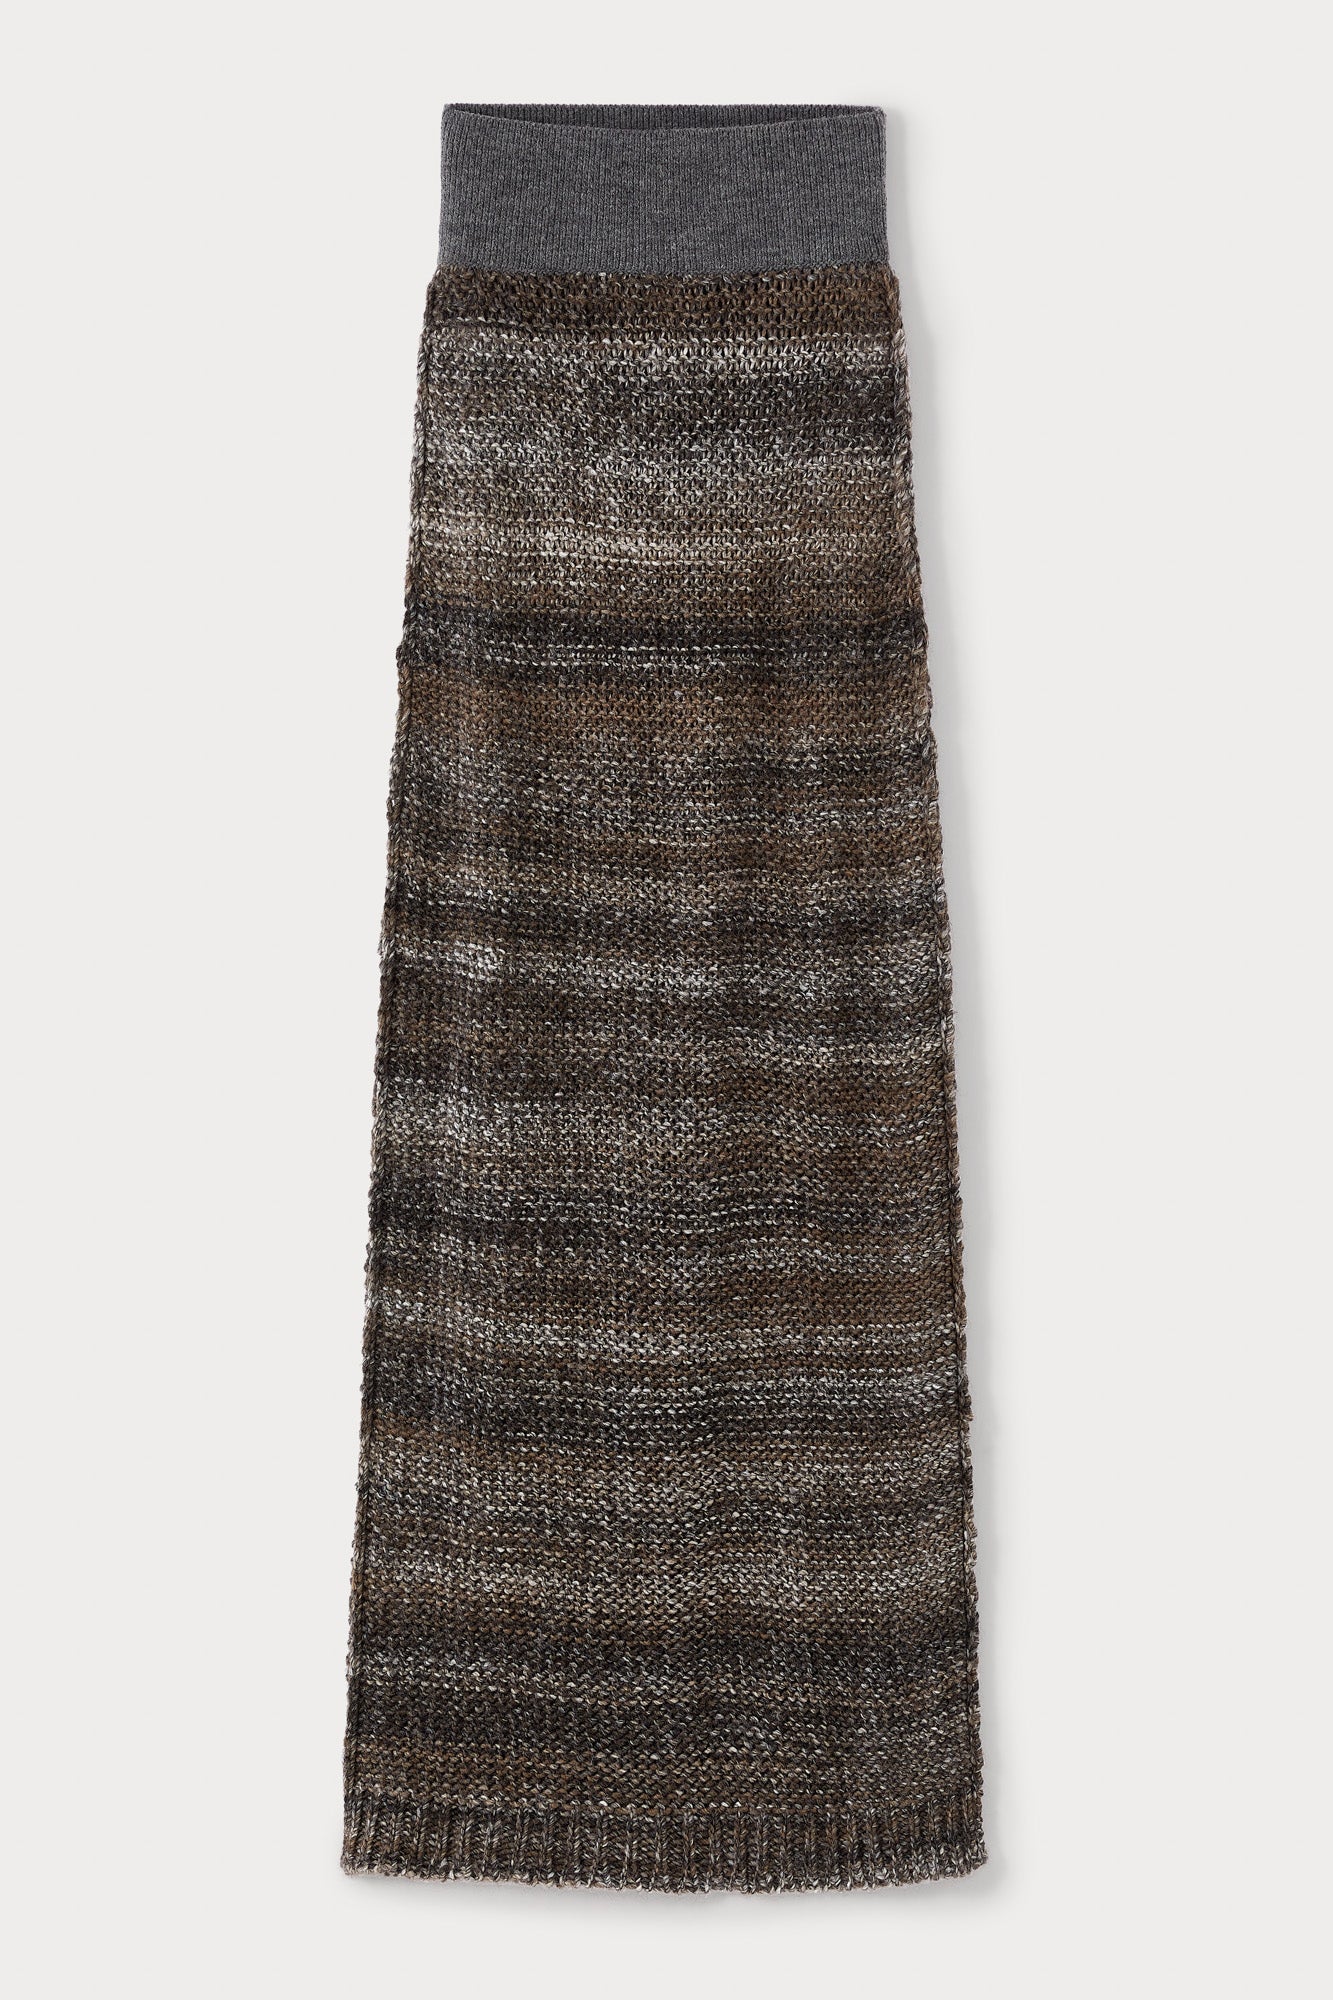 Wool grey skirt